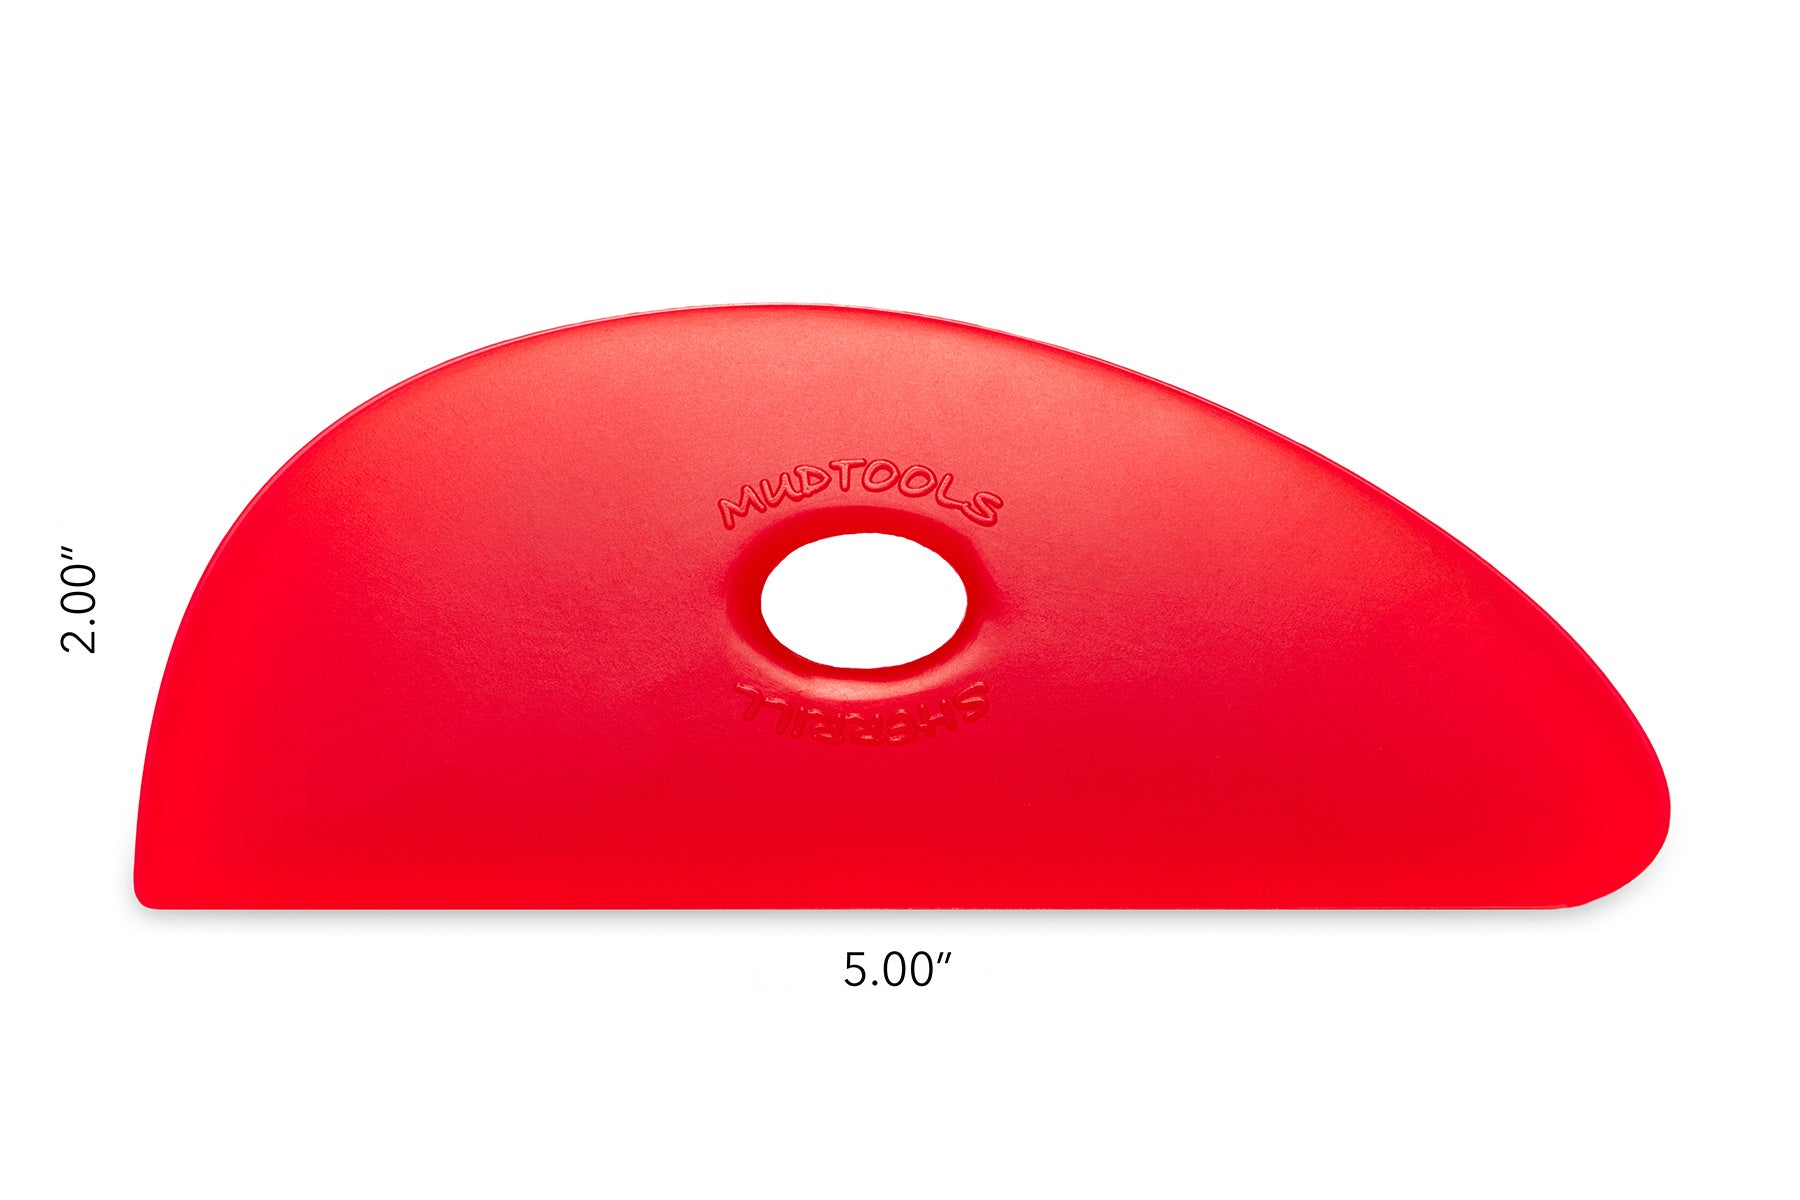 Mudtools Polymer Rib Red Size 1